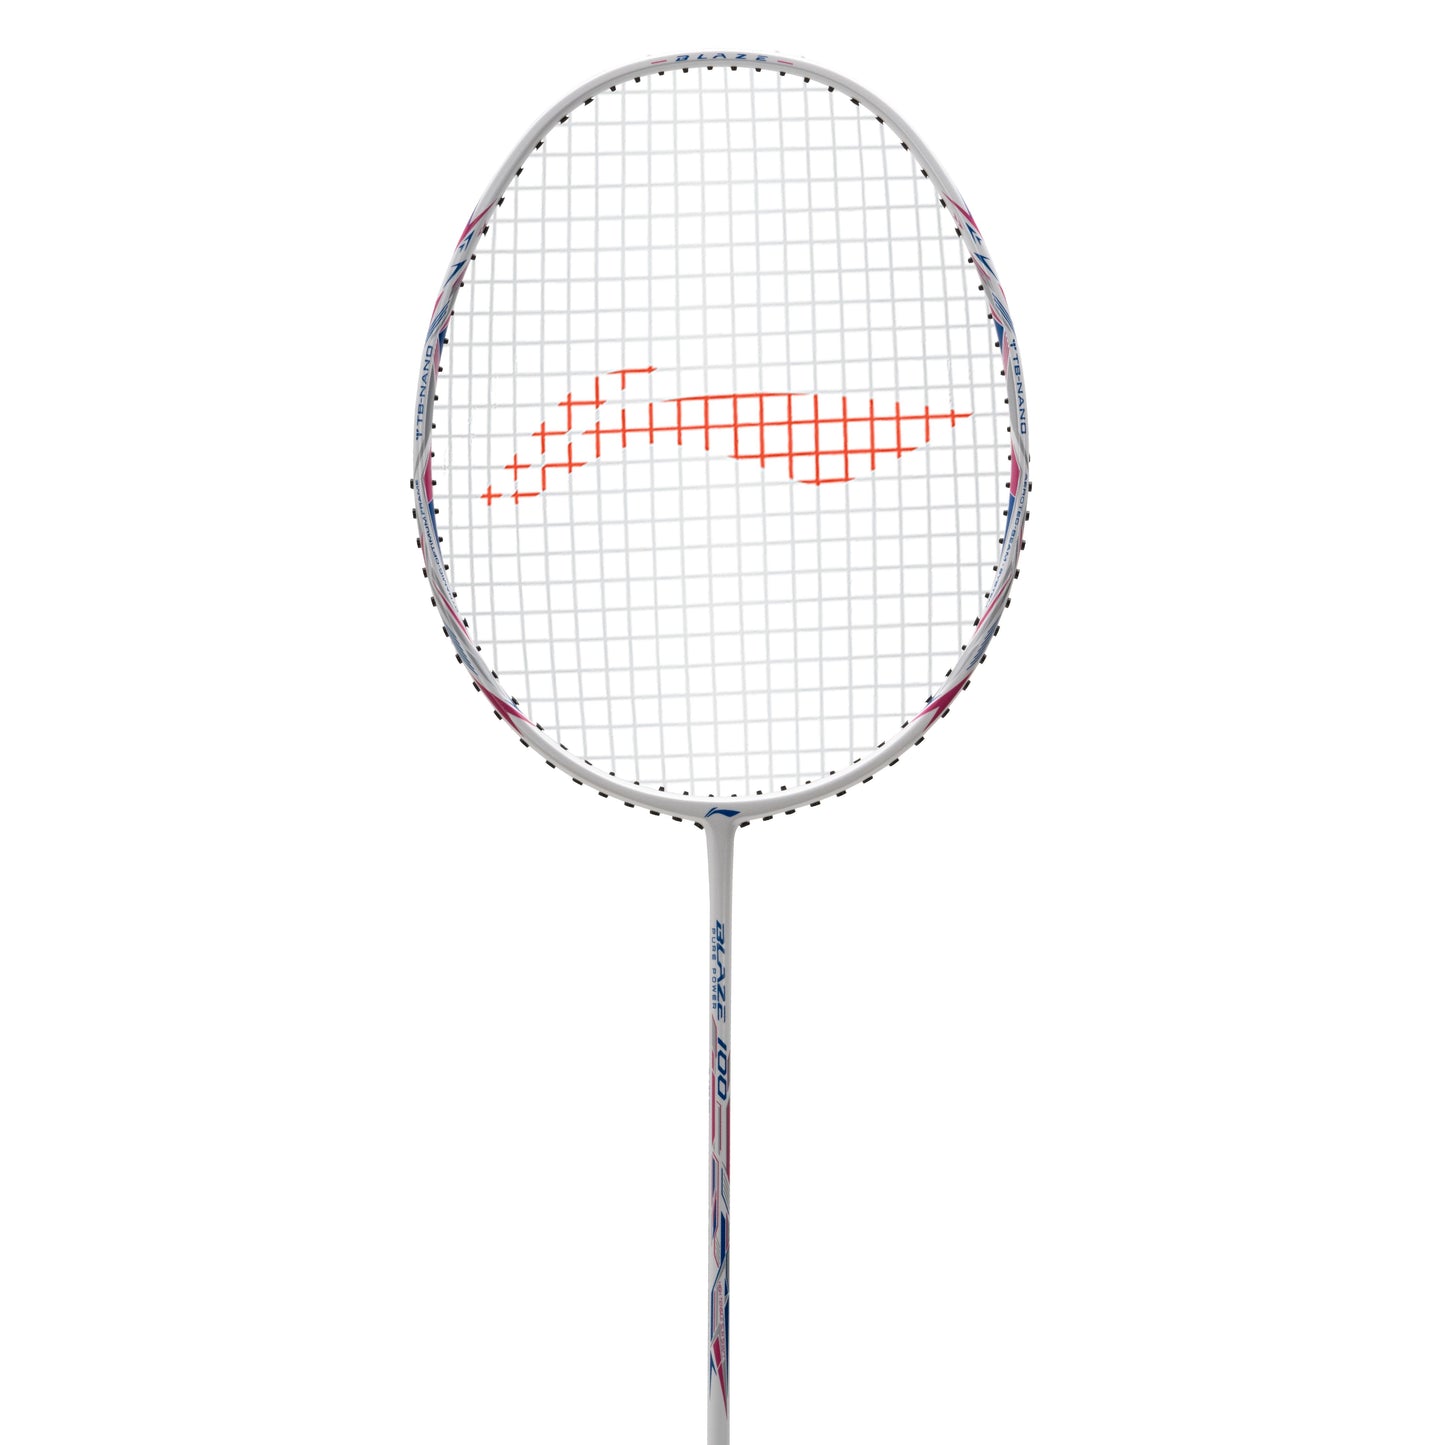 Li-Ning Blaze 100 Badminton Racket (Pearl White / Blue / Pink)